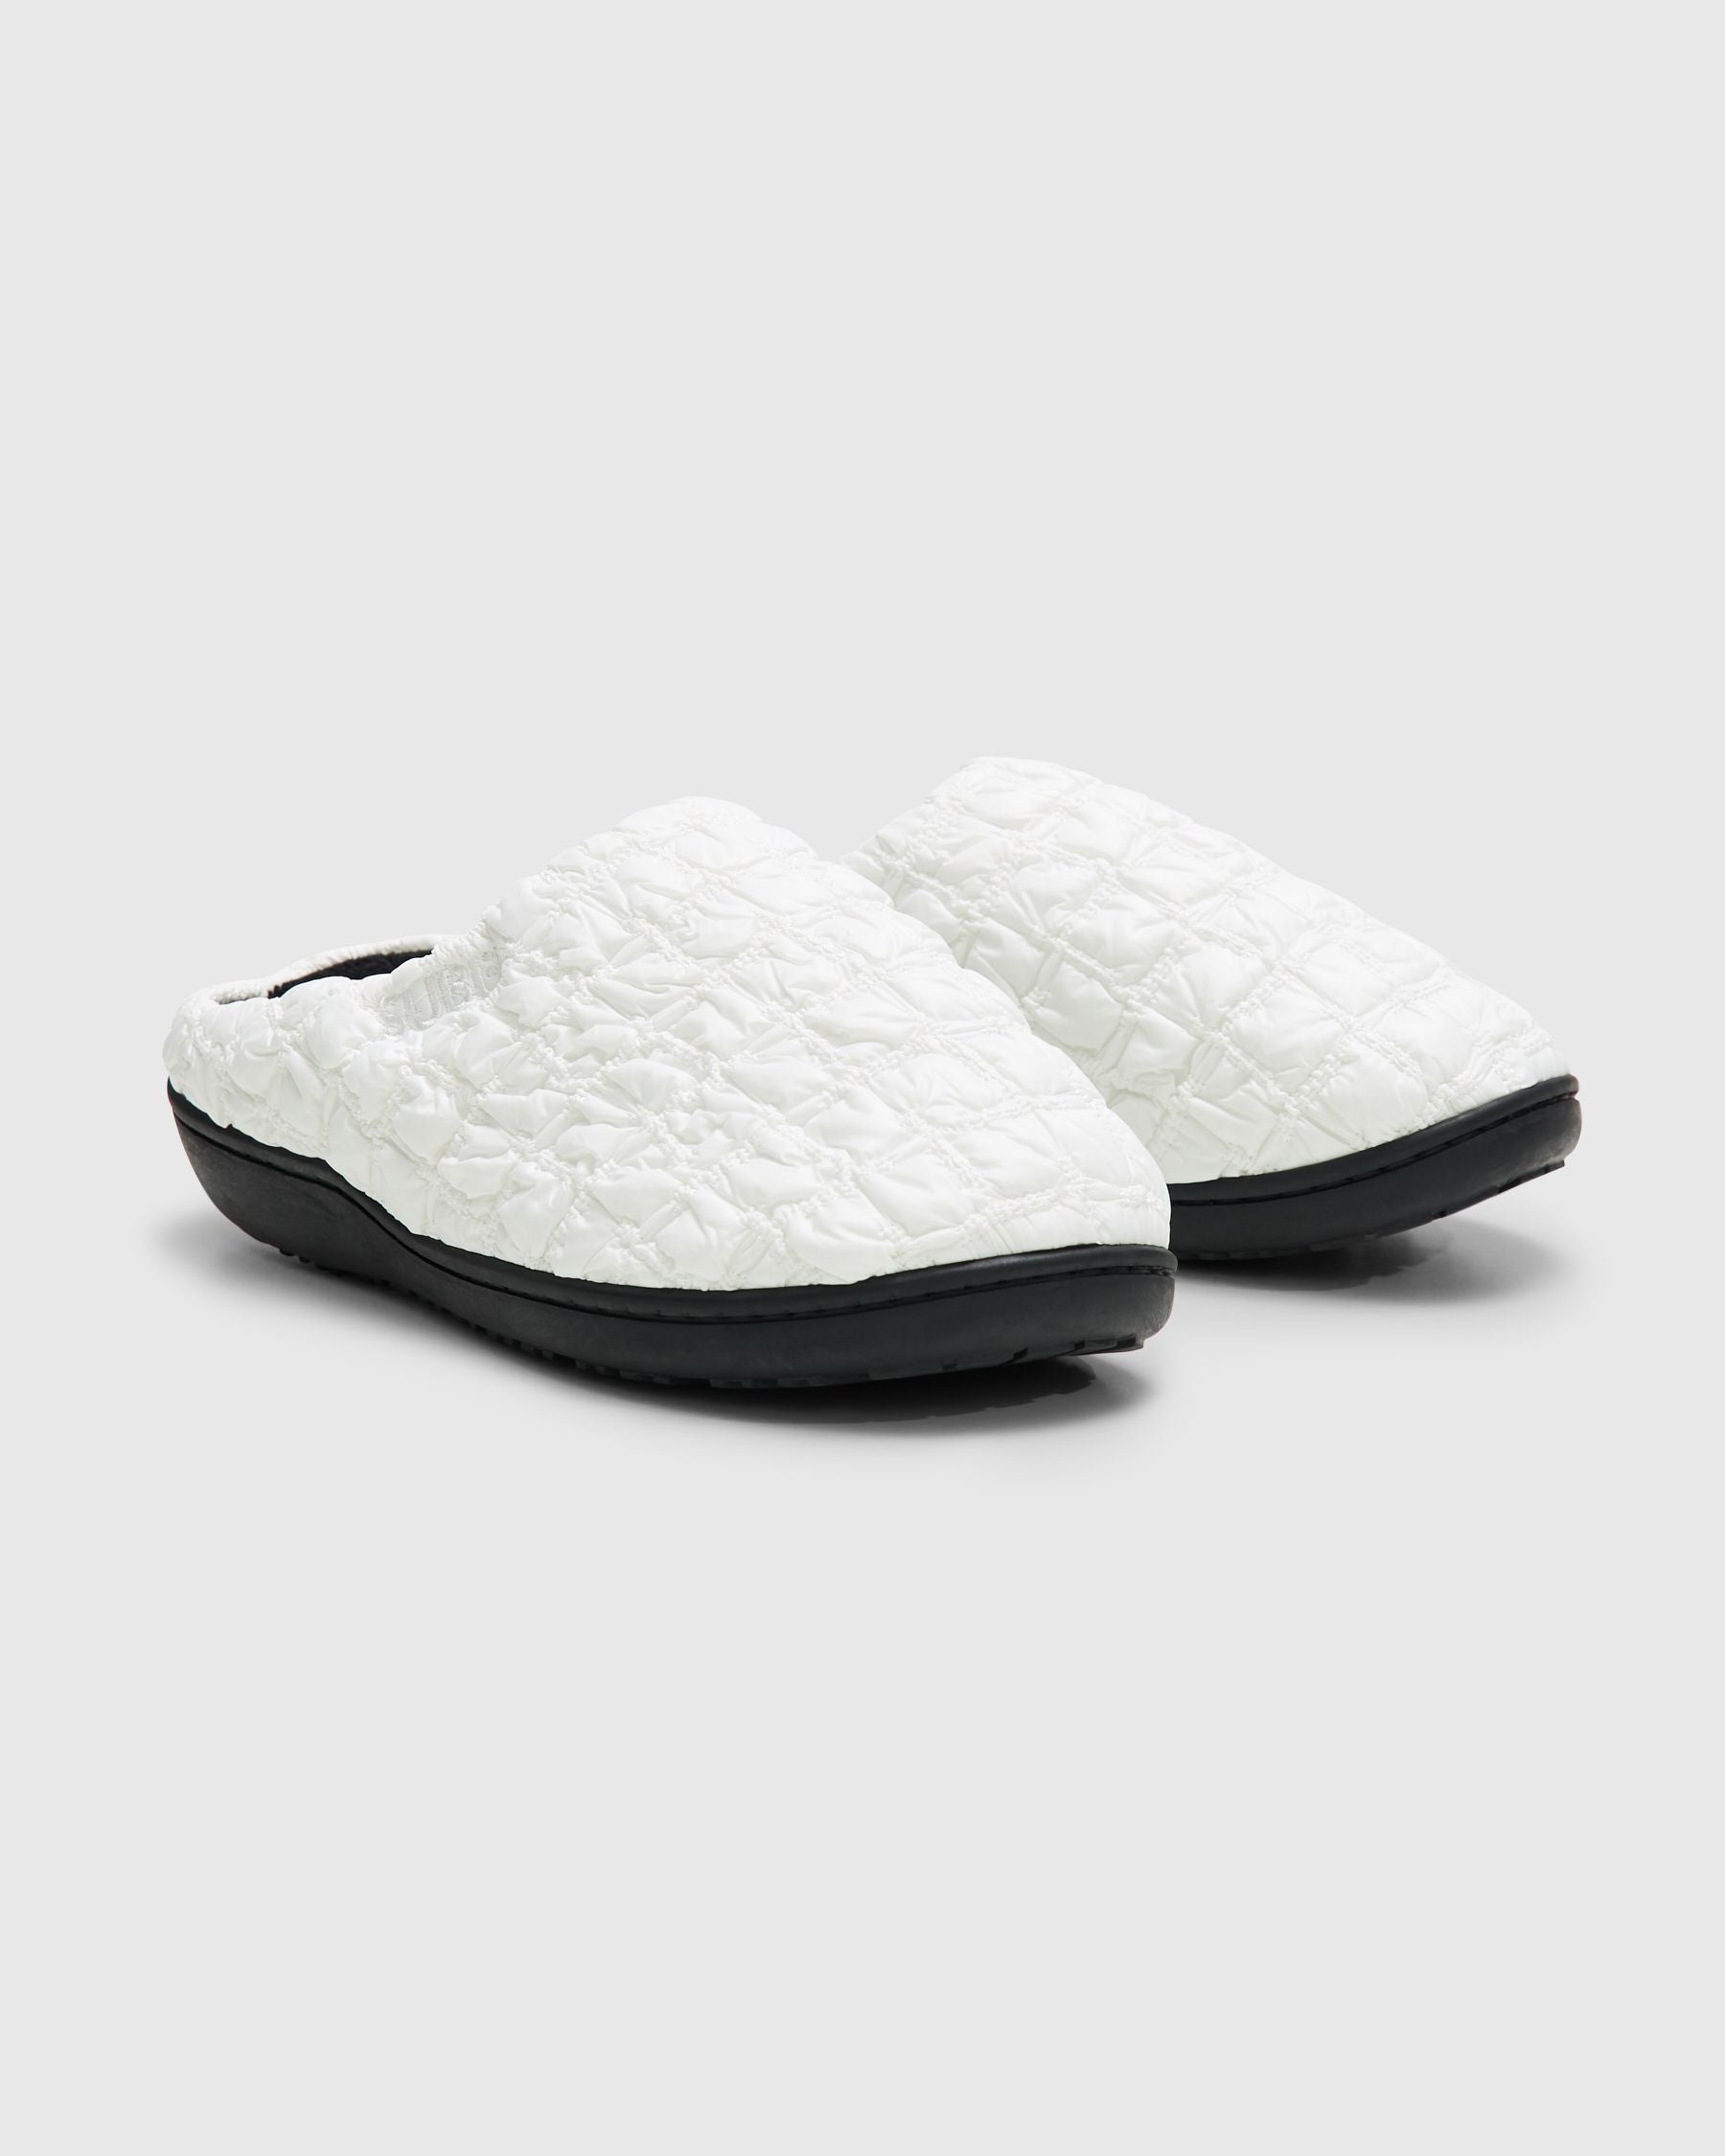 Subu Slippers in Bumpy White